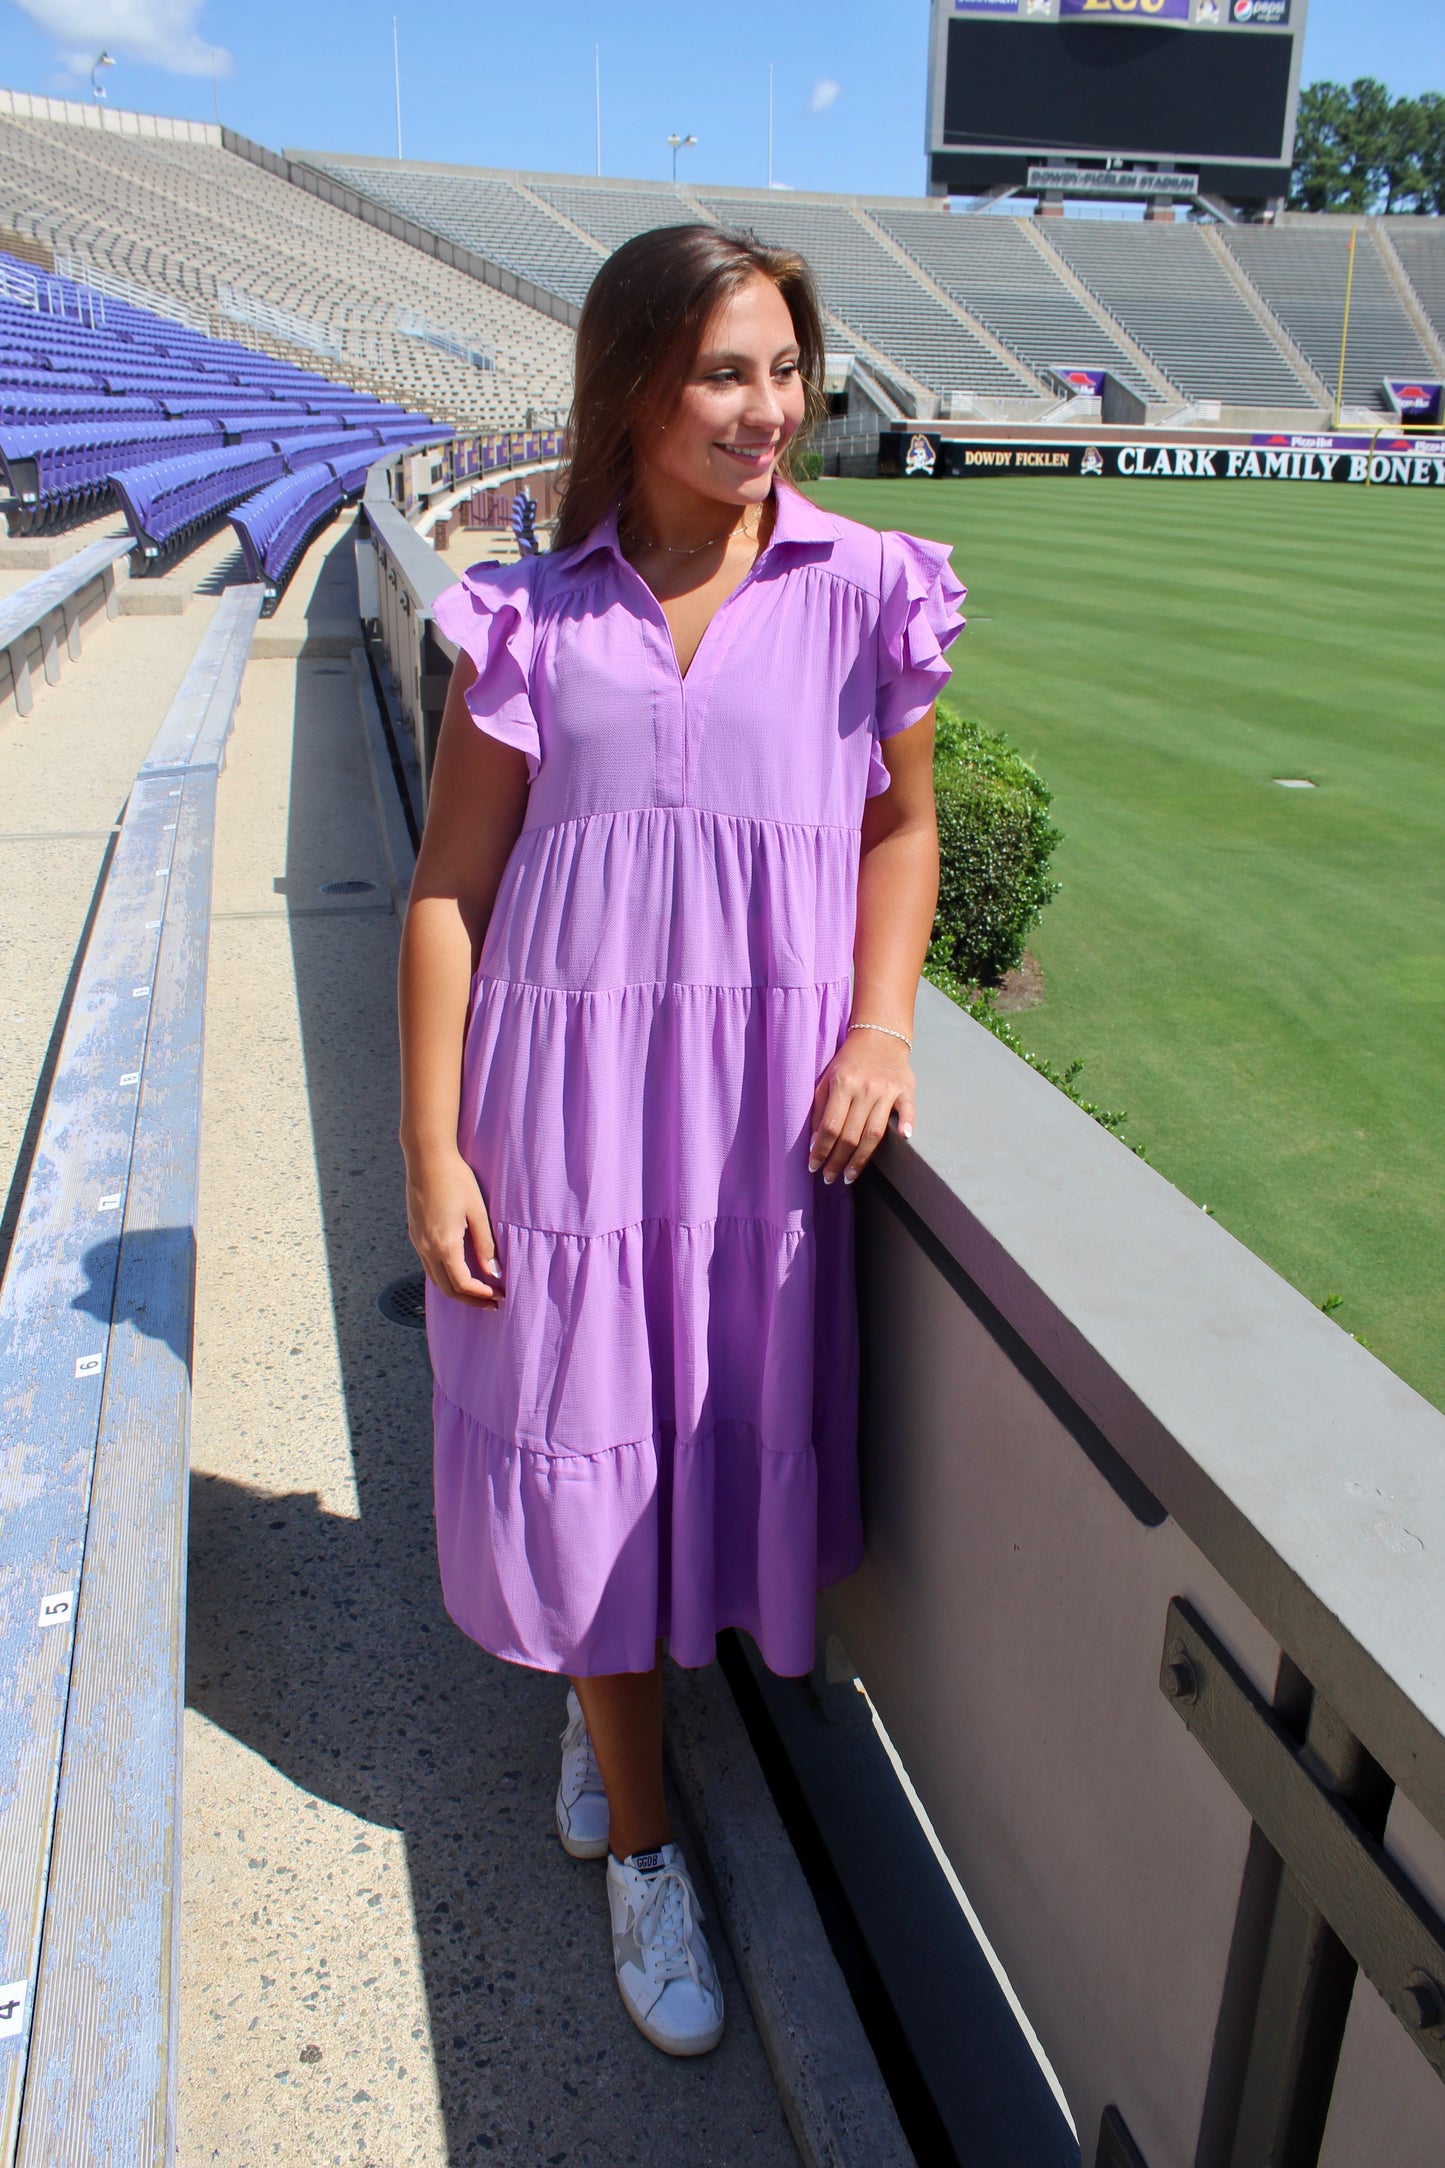 Purple Ruffle Sleeve Dress